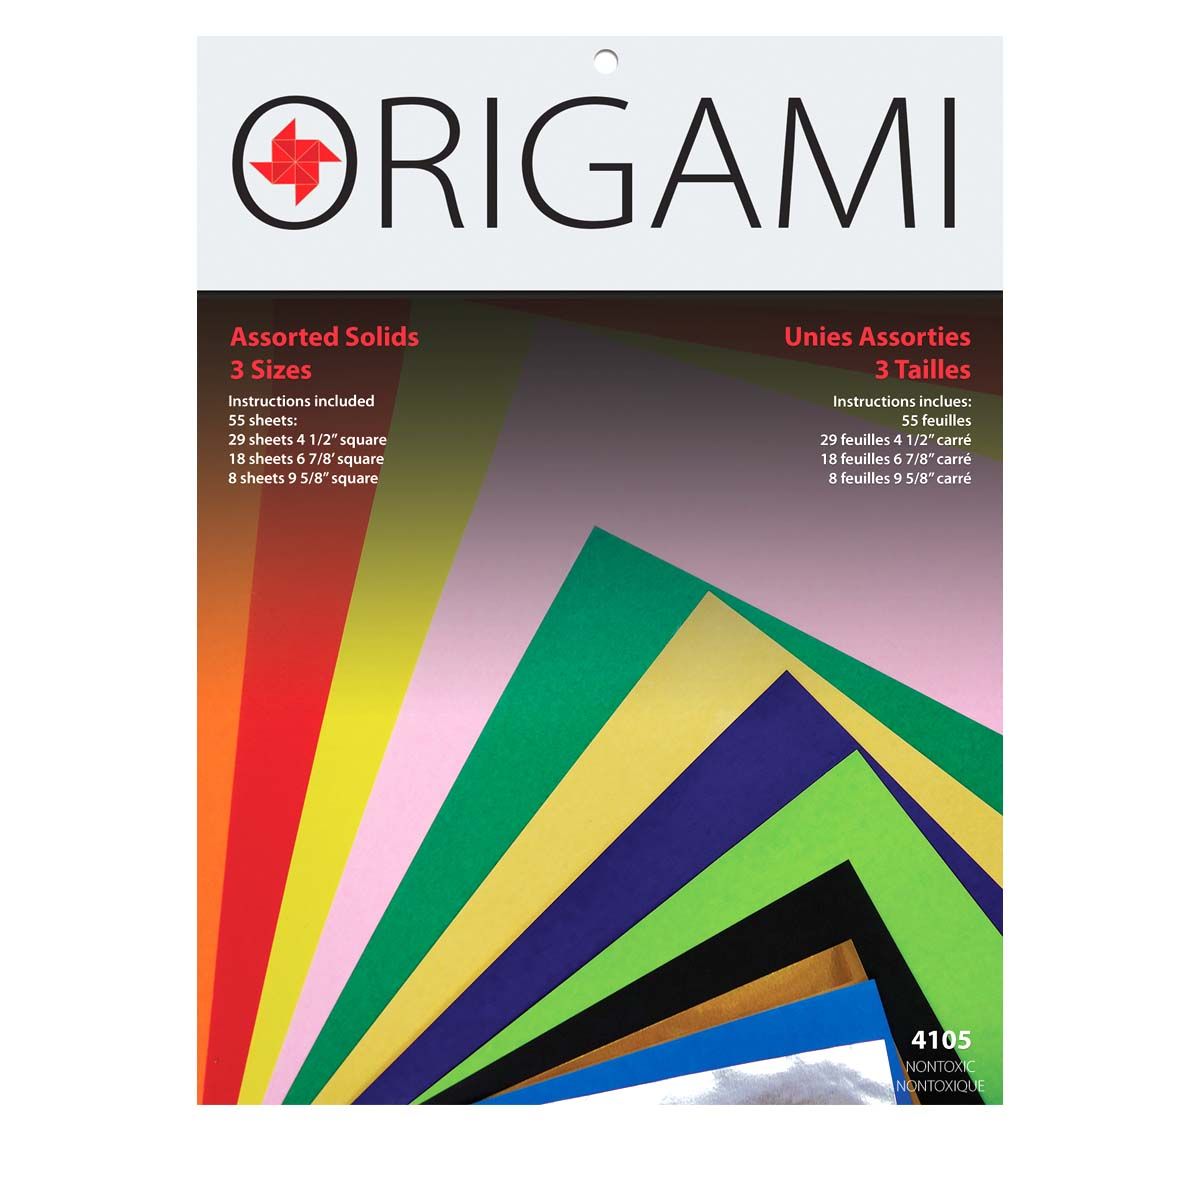 Yasutomo Pure Origami Papers